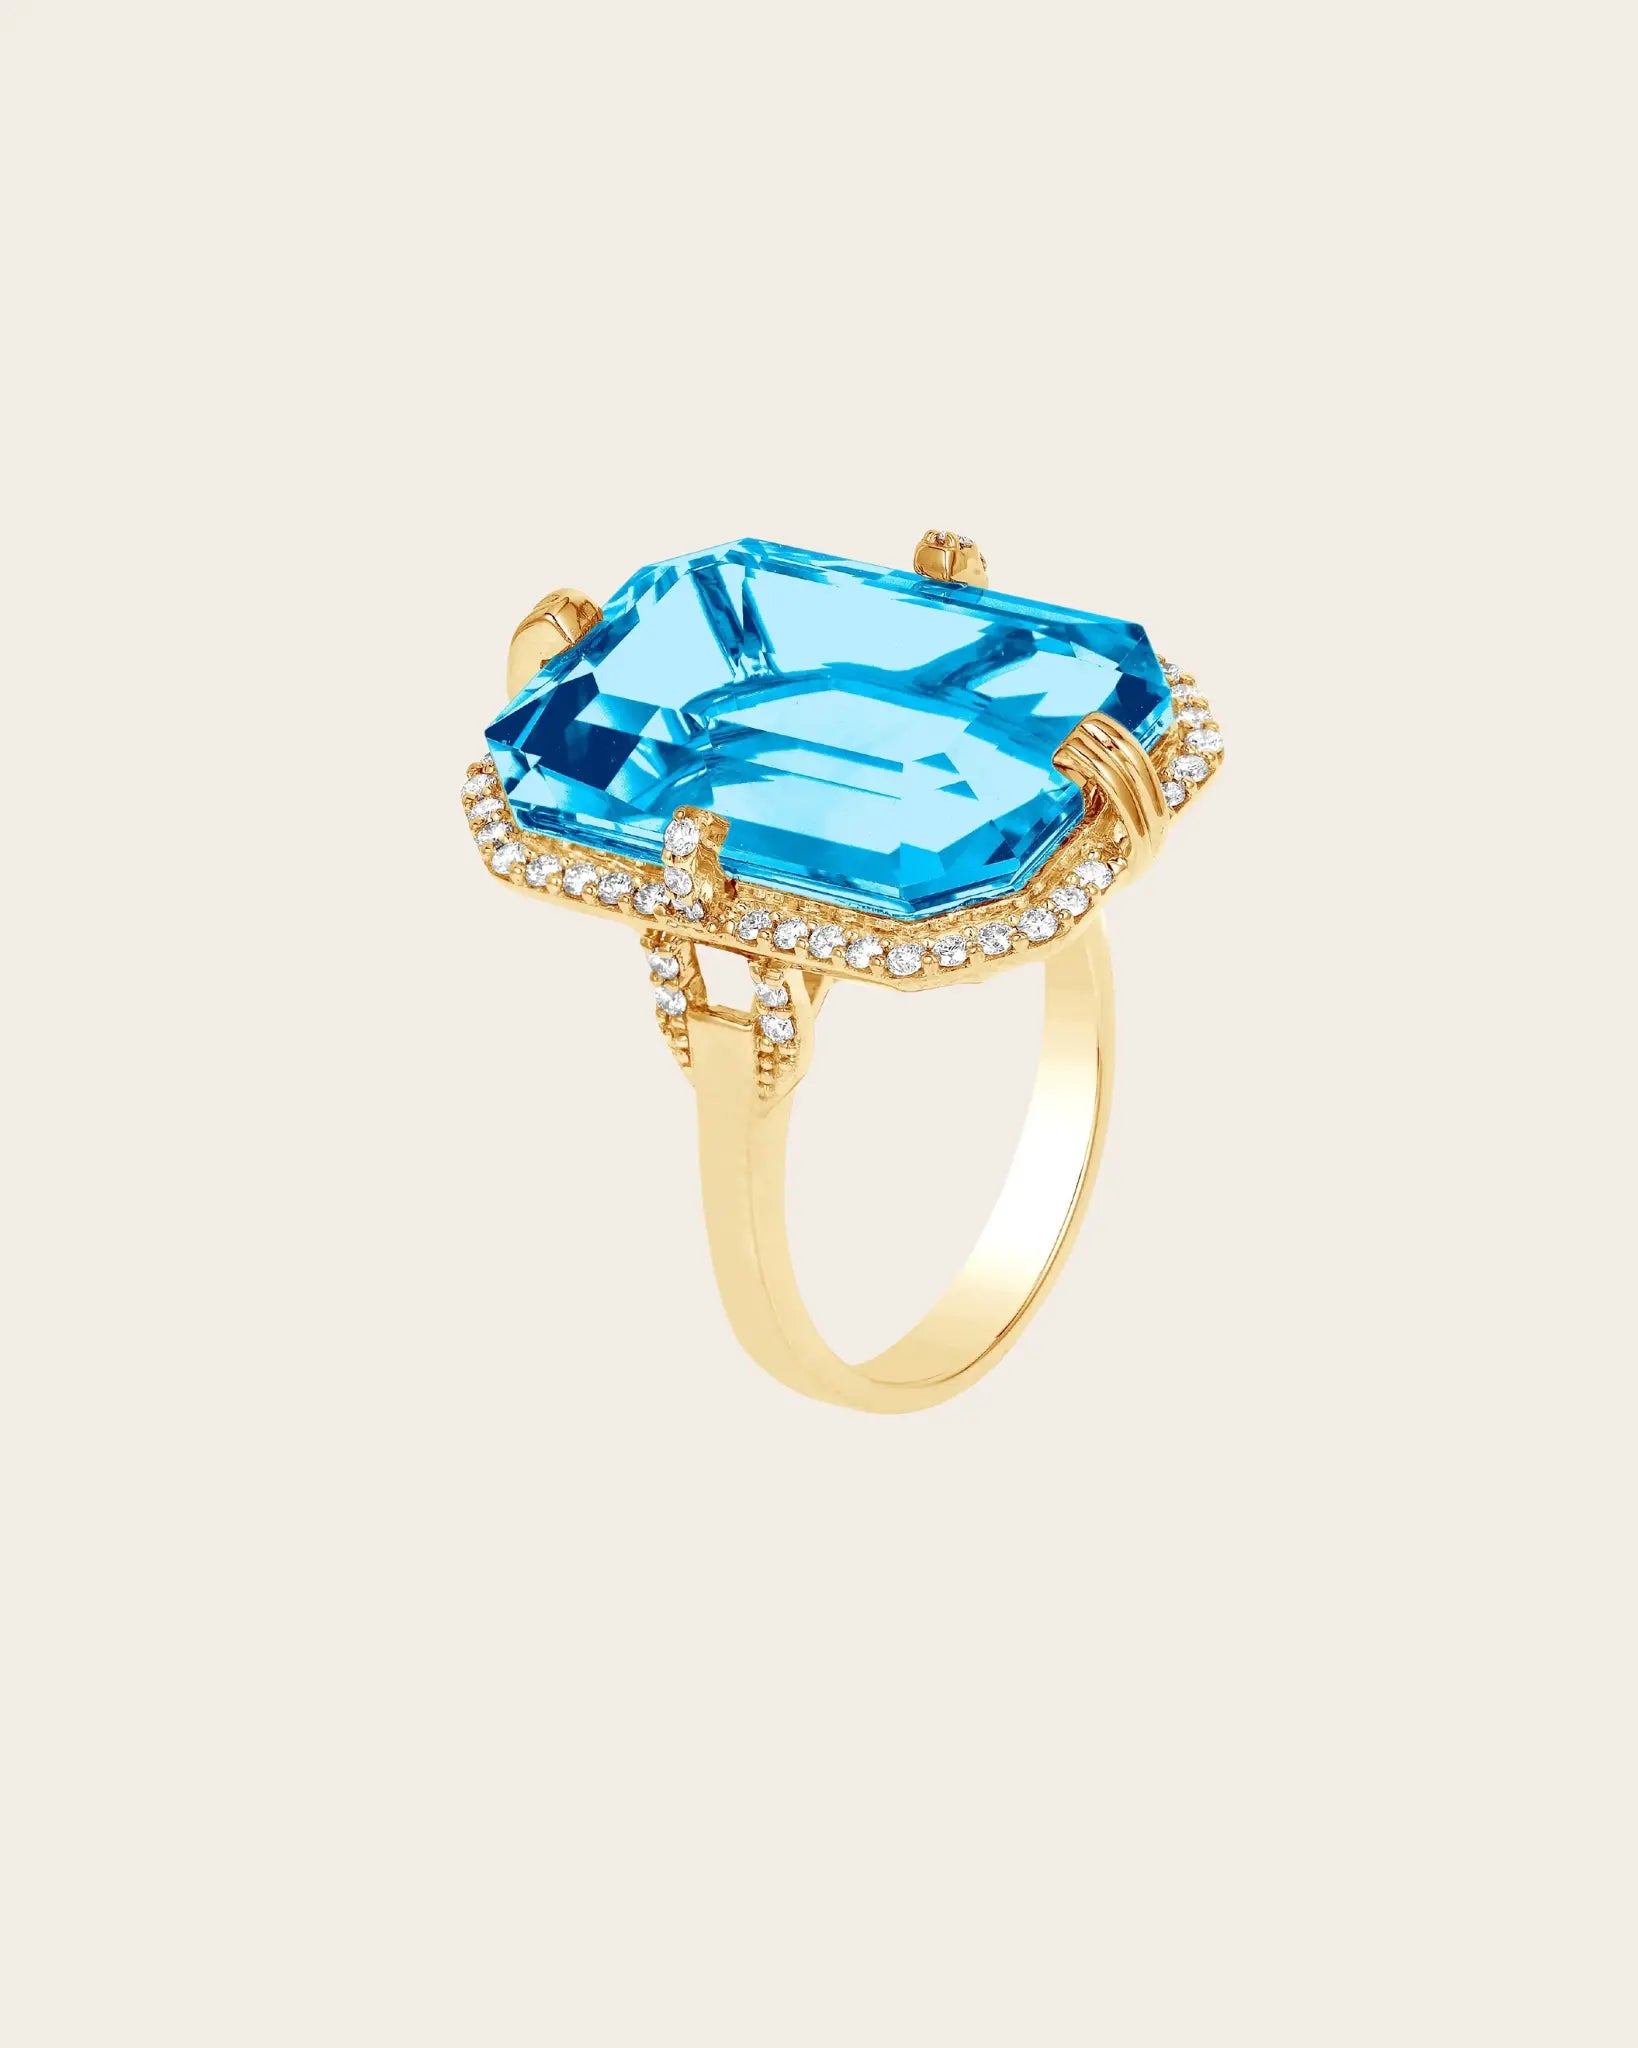 Gossip' Blue Topaz Emerald Cut Ring Gossip' Blue Topaz Emerald Cut Ring Goshwara Goshwara  Squash Blossom Vail